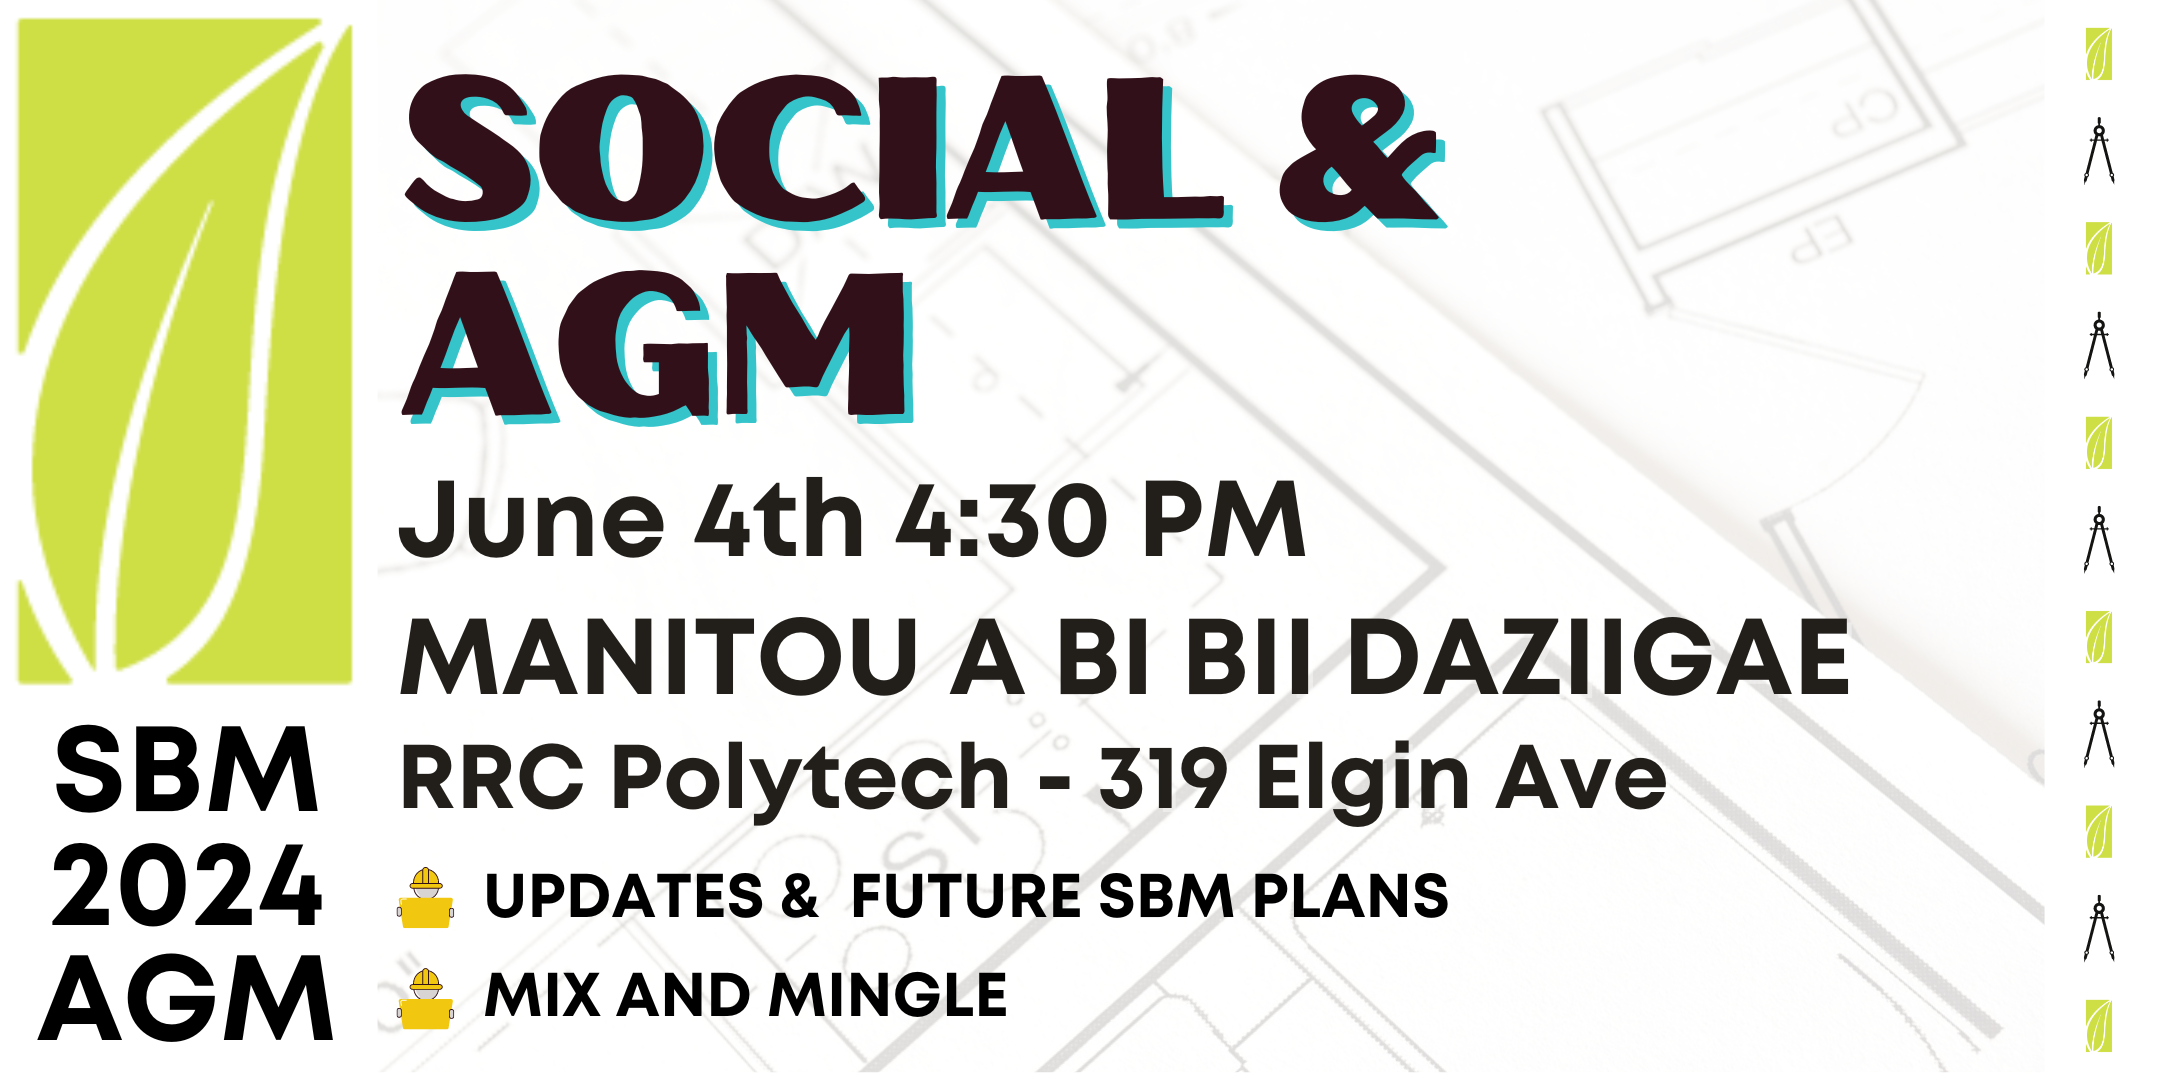 SOCIAL & AGM June 4th 4:30 Manitou A biBii Daziigae RRC Polytech - 319 Elgin Ave Updates & future SBM Plans, MIx and Mingle SBM 2024 AGM